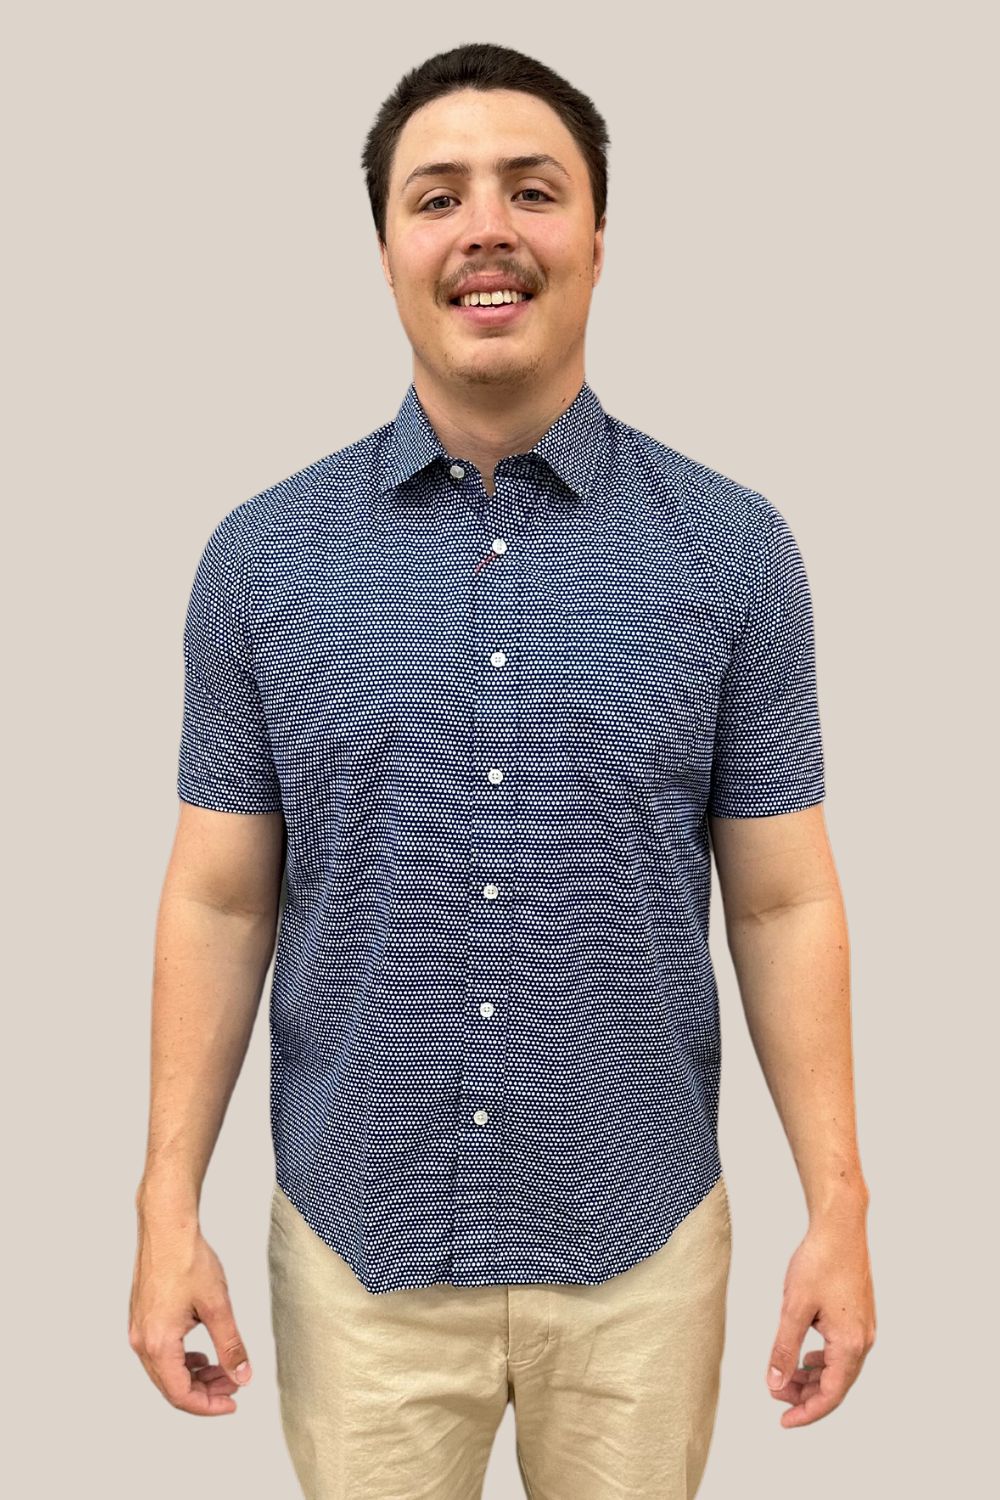 Blue Horizon Printed Short Sleeve Shirt